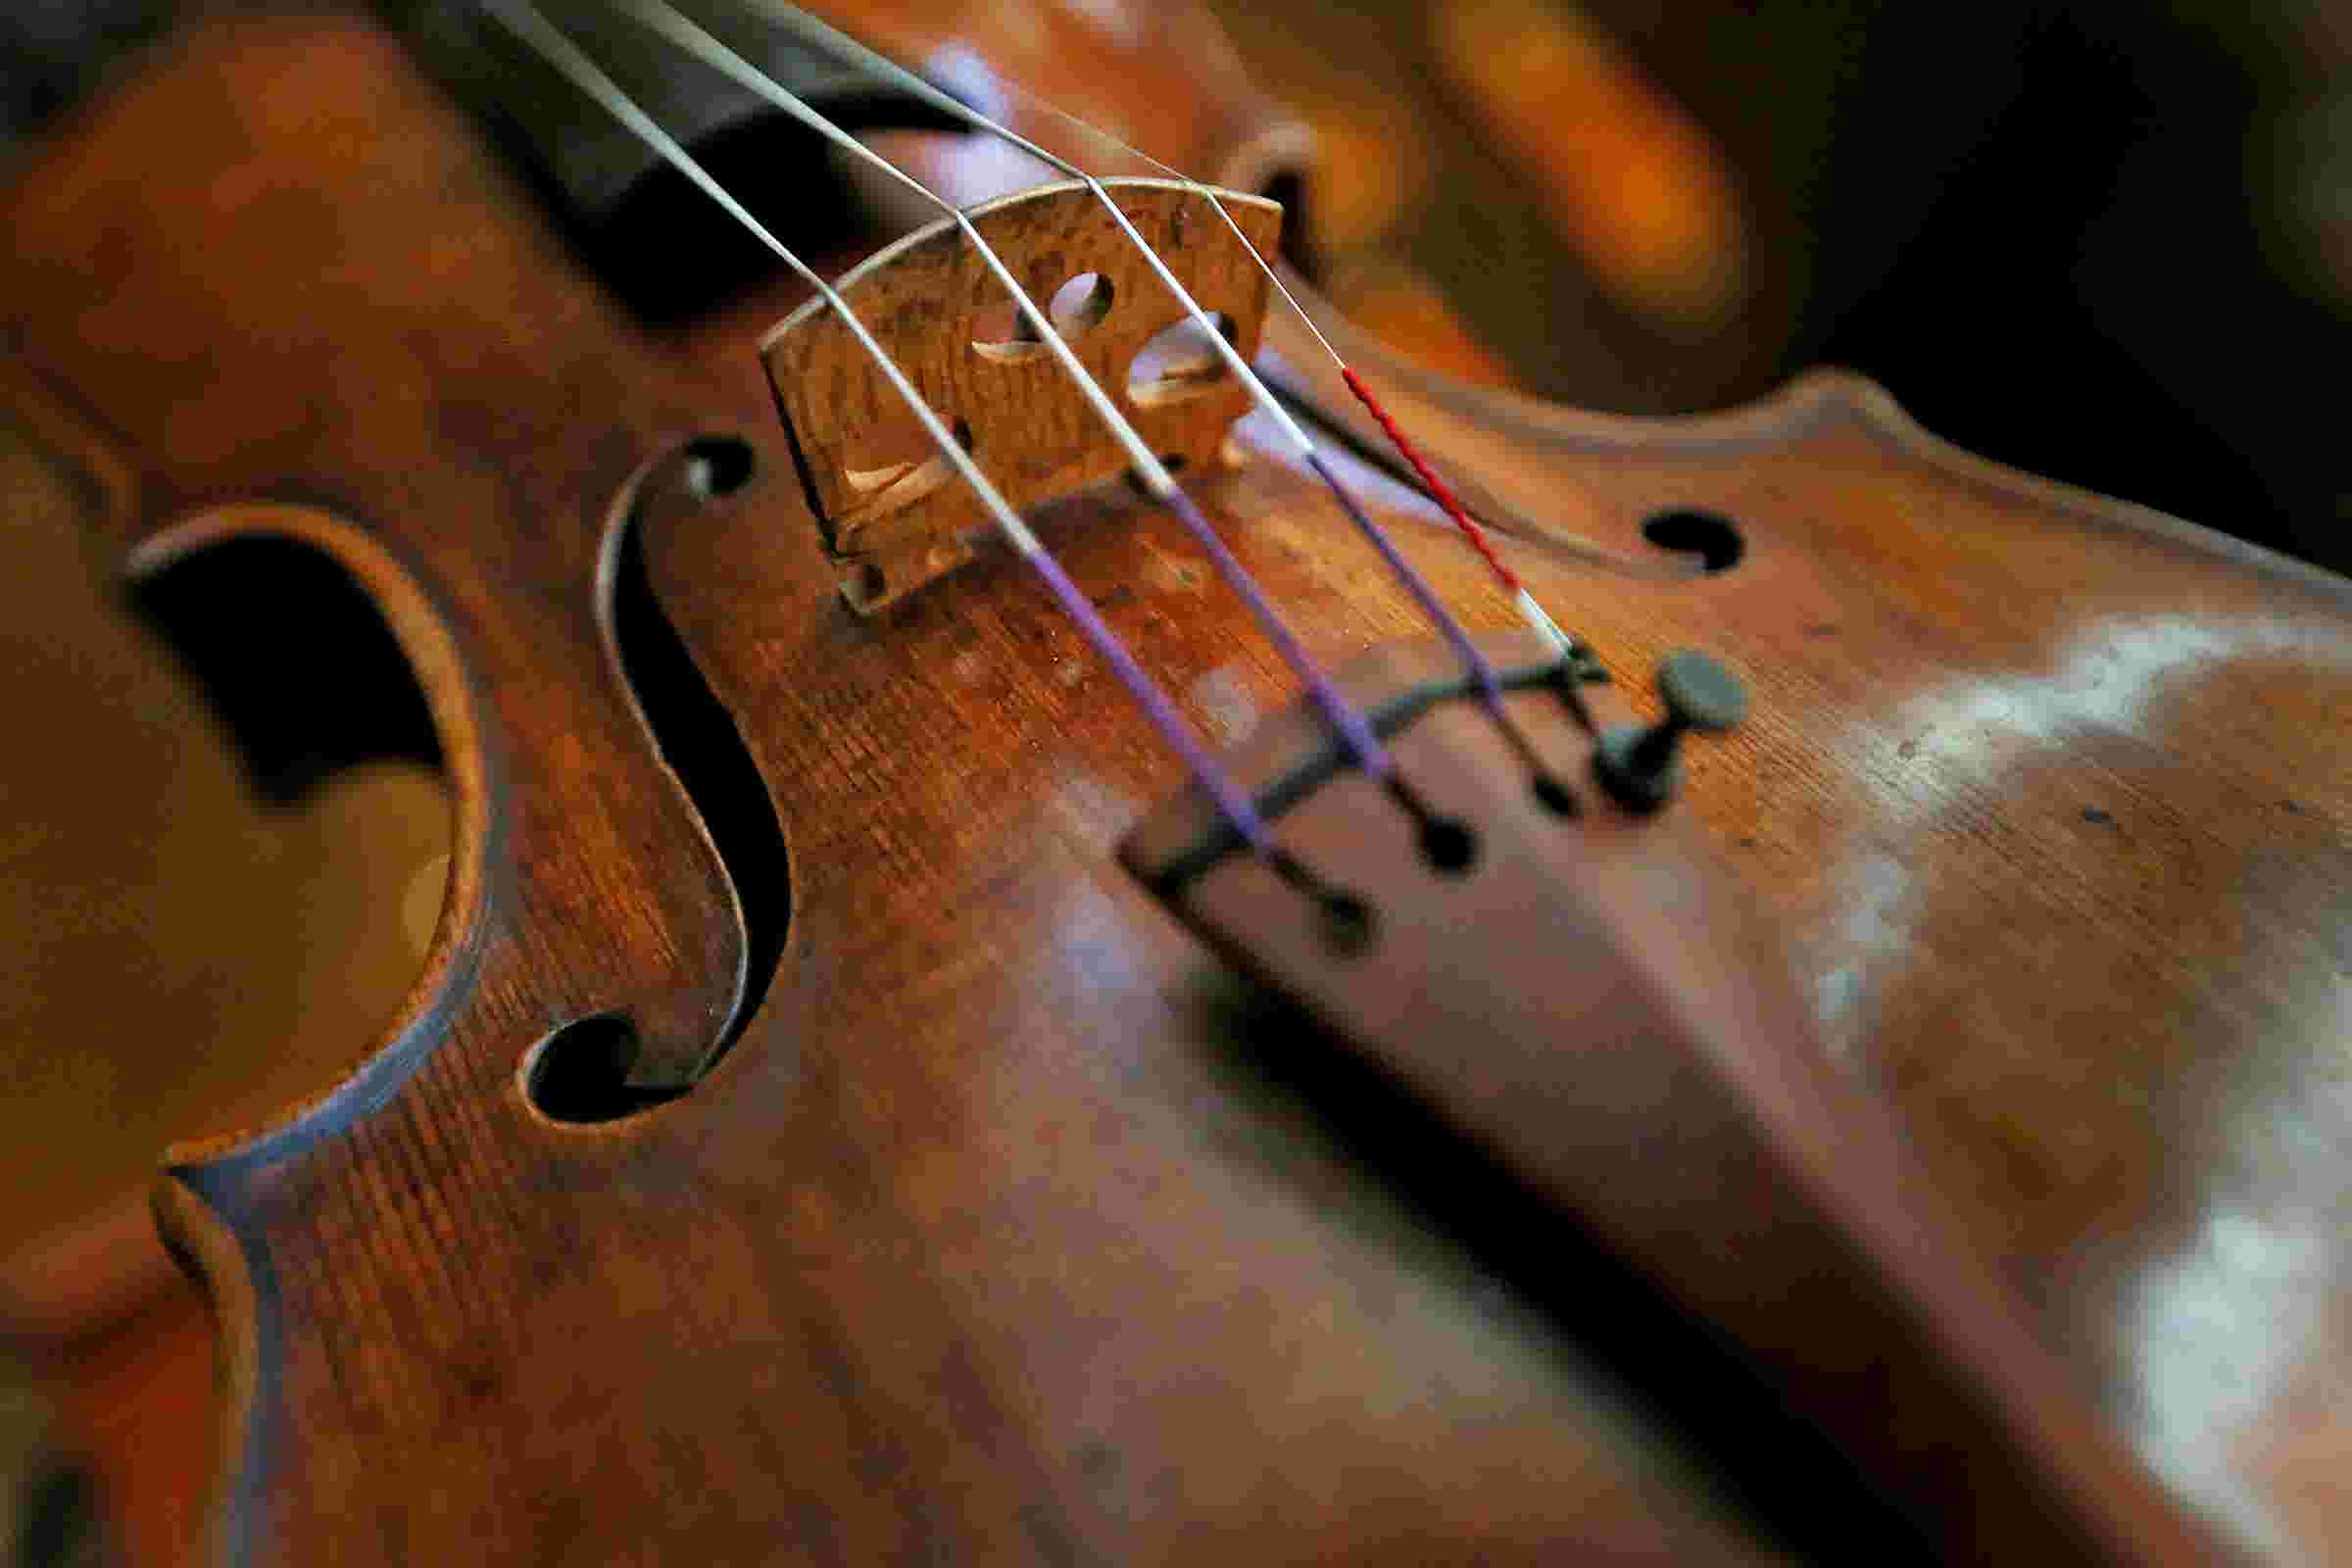 stradivarius violin